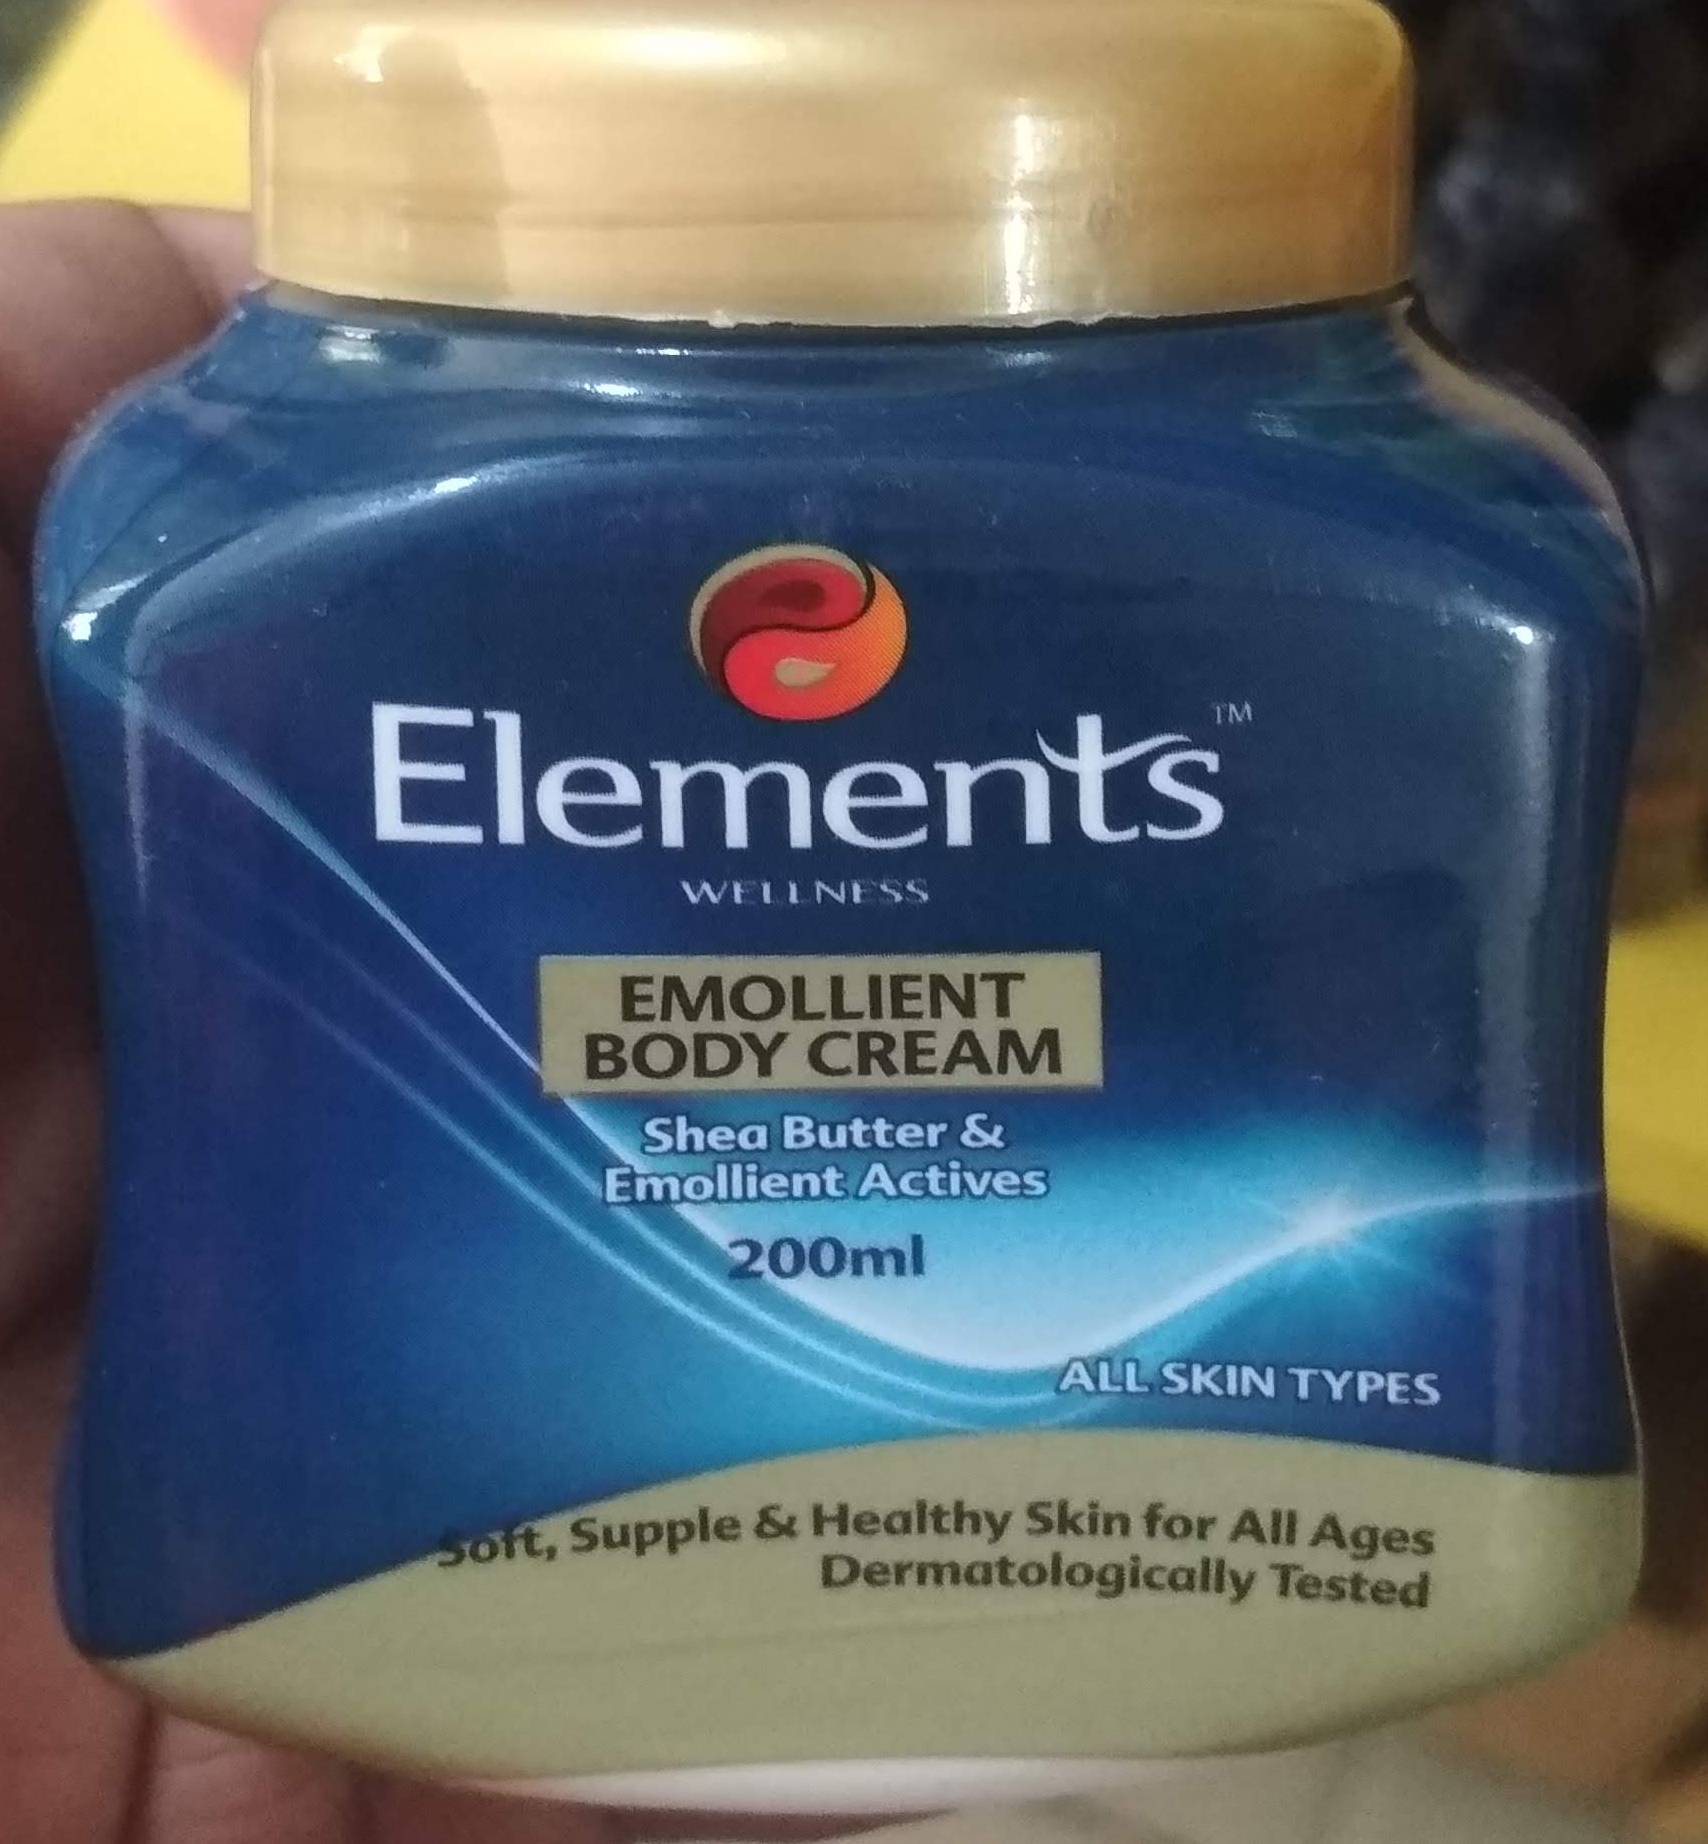 emollient body cream 200ml Elements